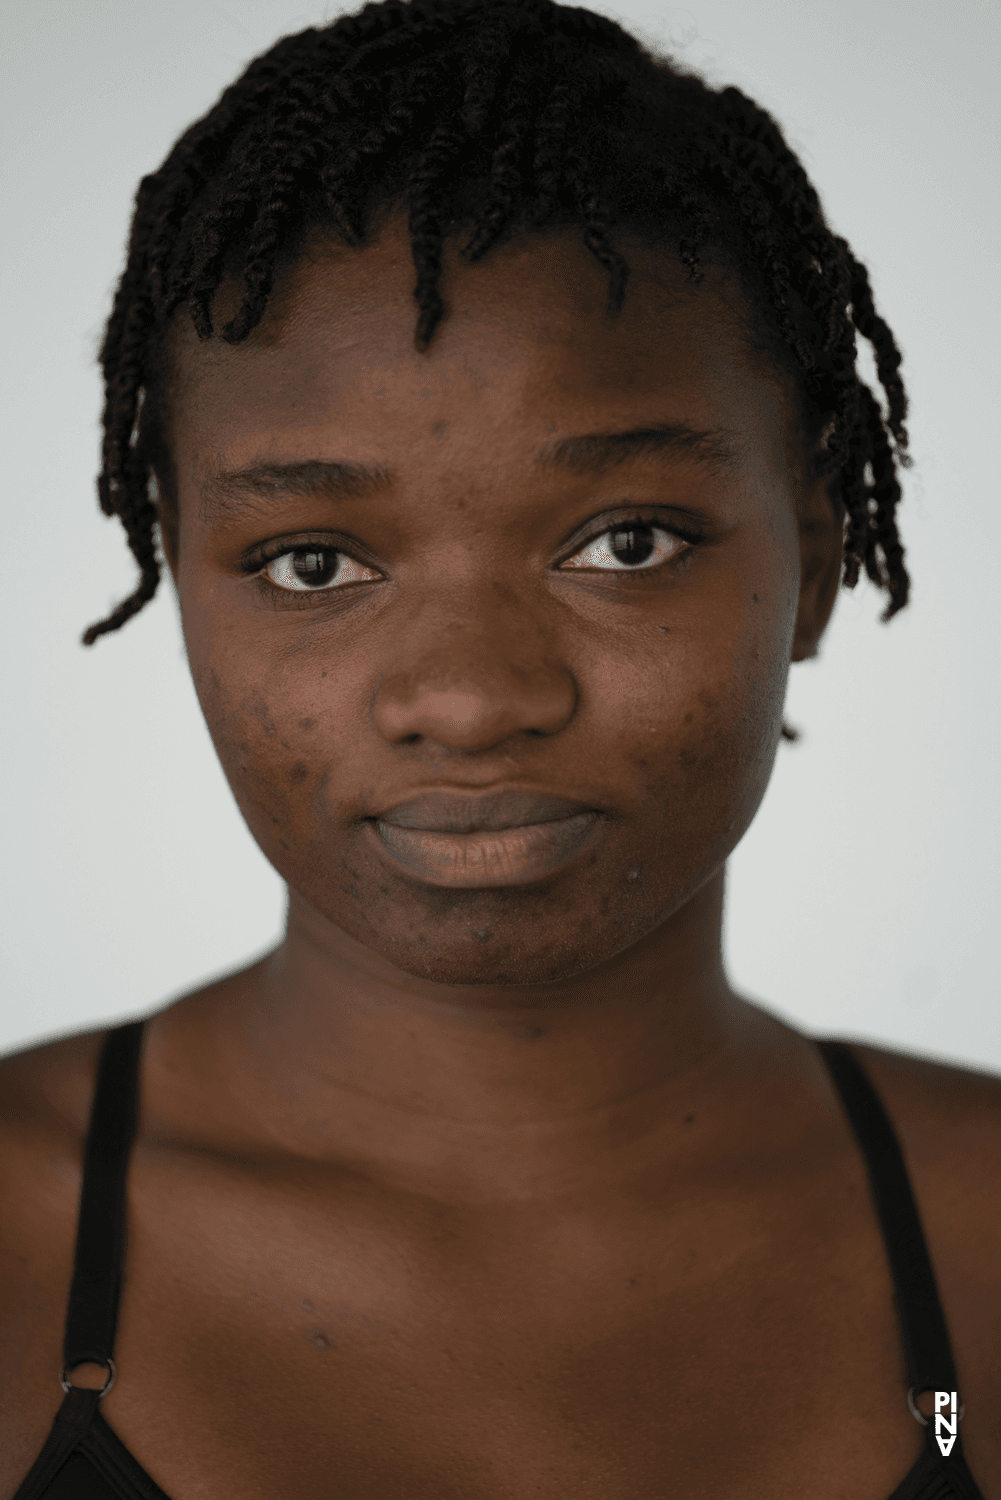 Stéphanie Mwamba, 24. September 2021